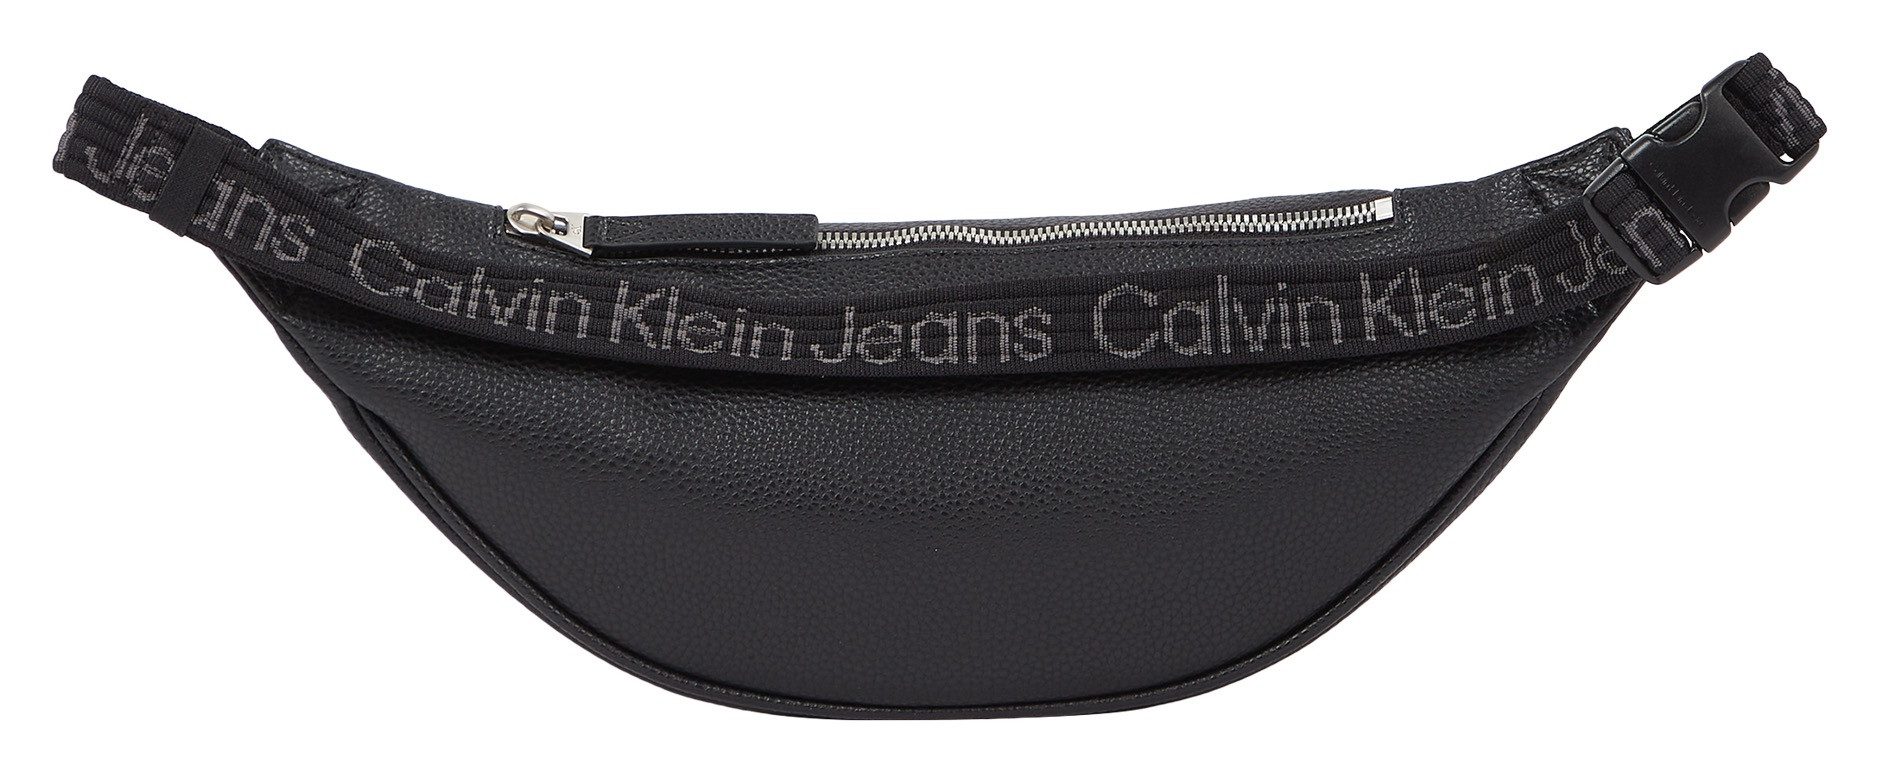 Calvin Klein Jeans Bauchtasche ULTRALIGHT WAISTBAG38 PU, Gürteltasche Hüfttasche Herrenschultertasche Tasche